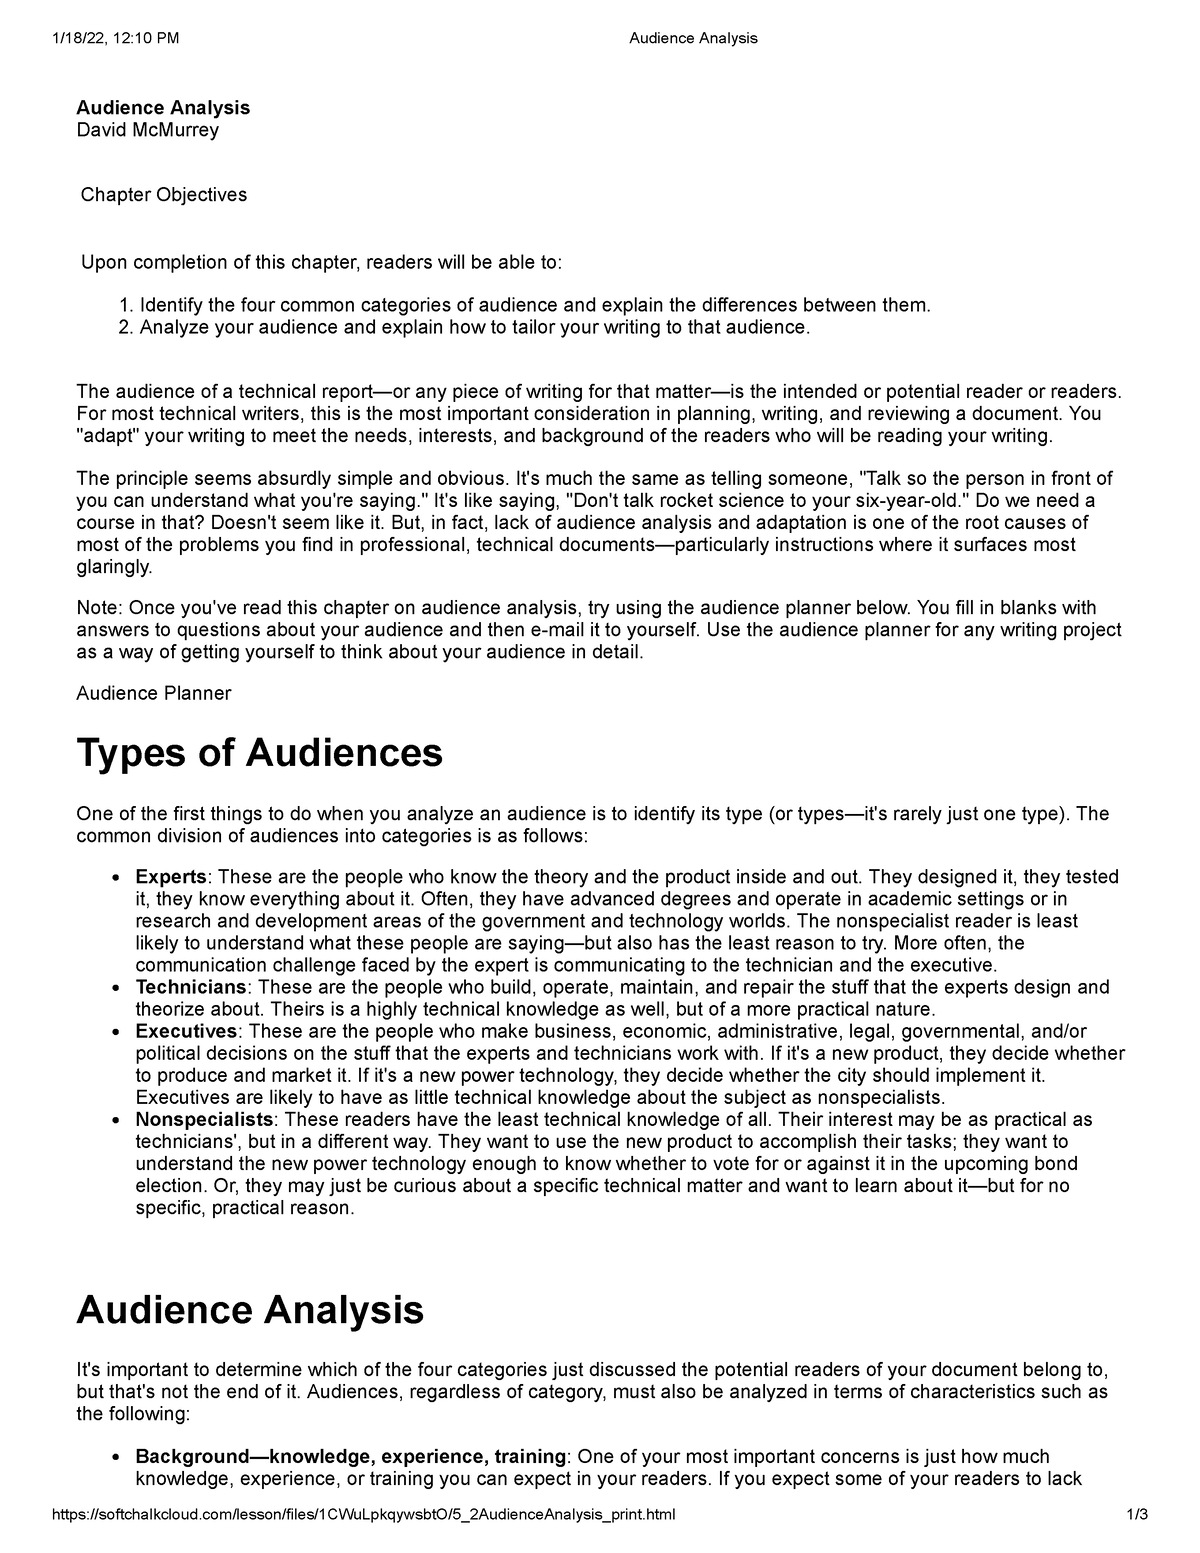 audience analysis essay example